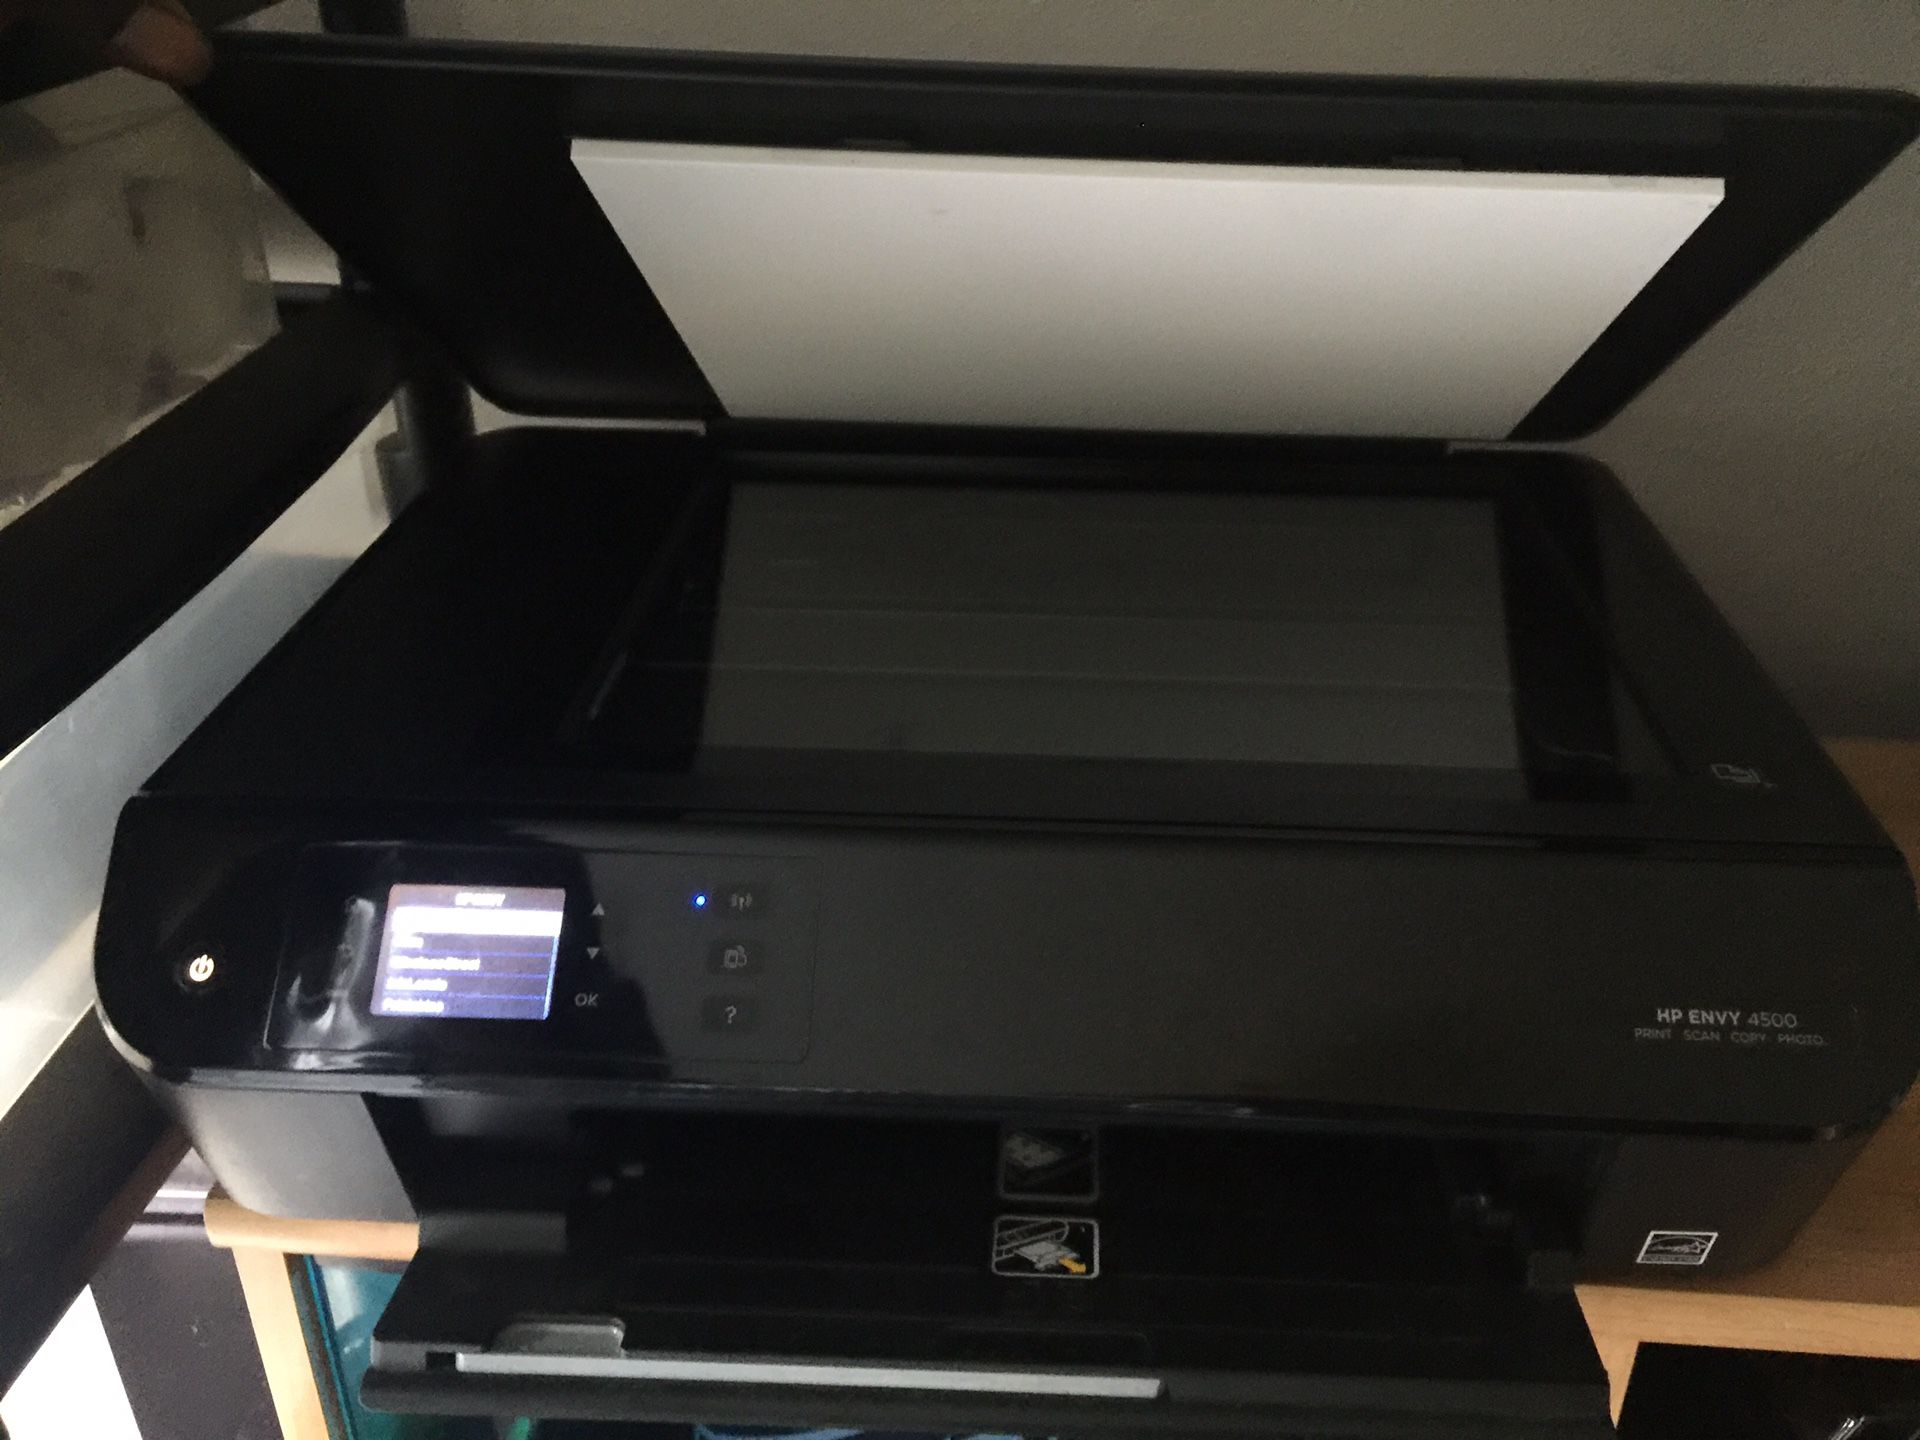 Hp envy 4500 printer